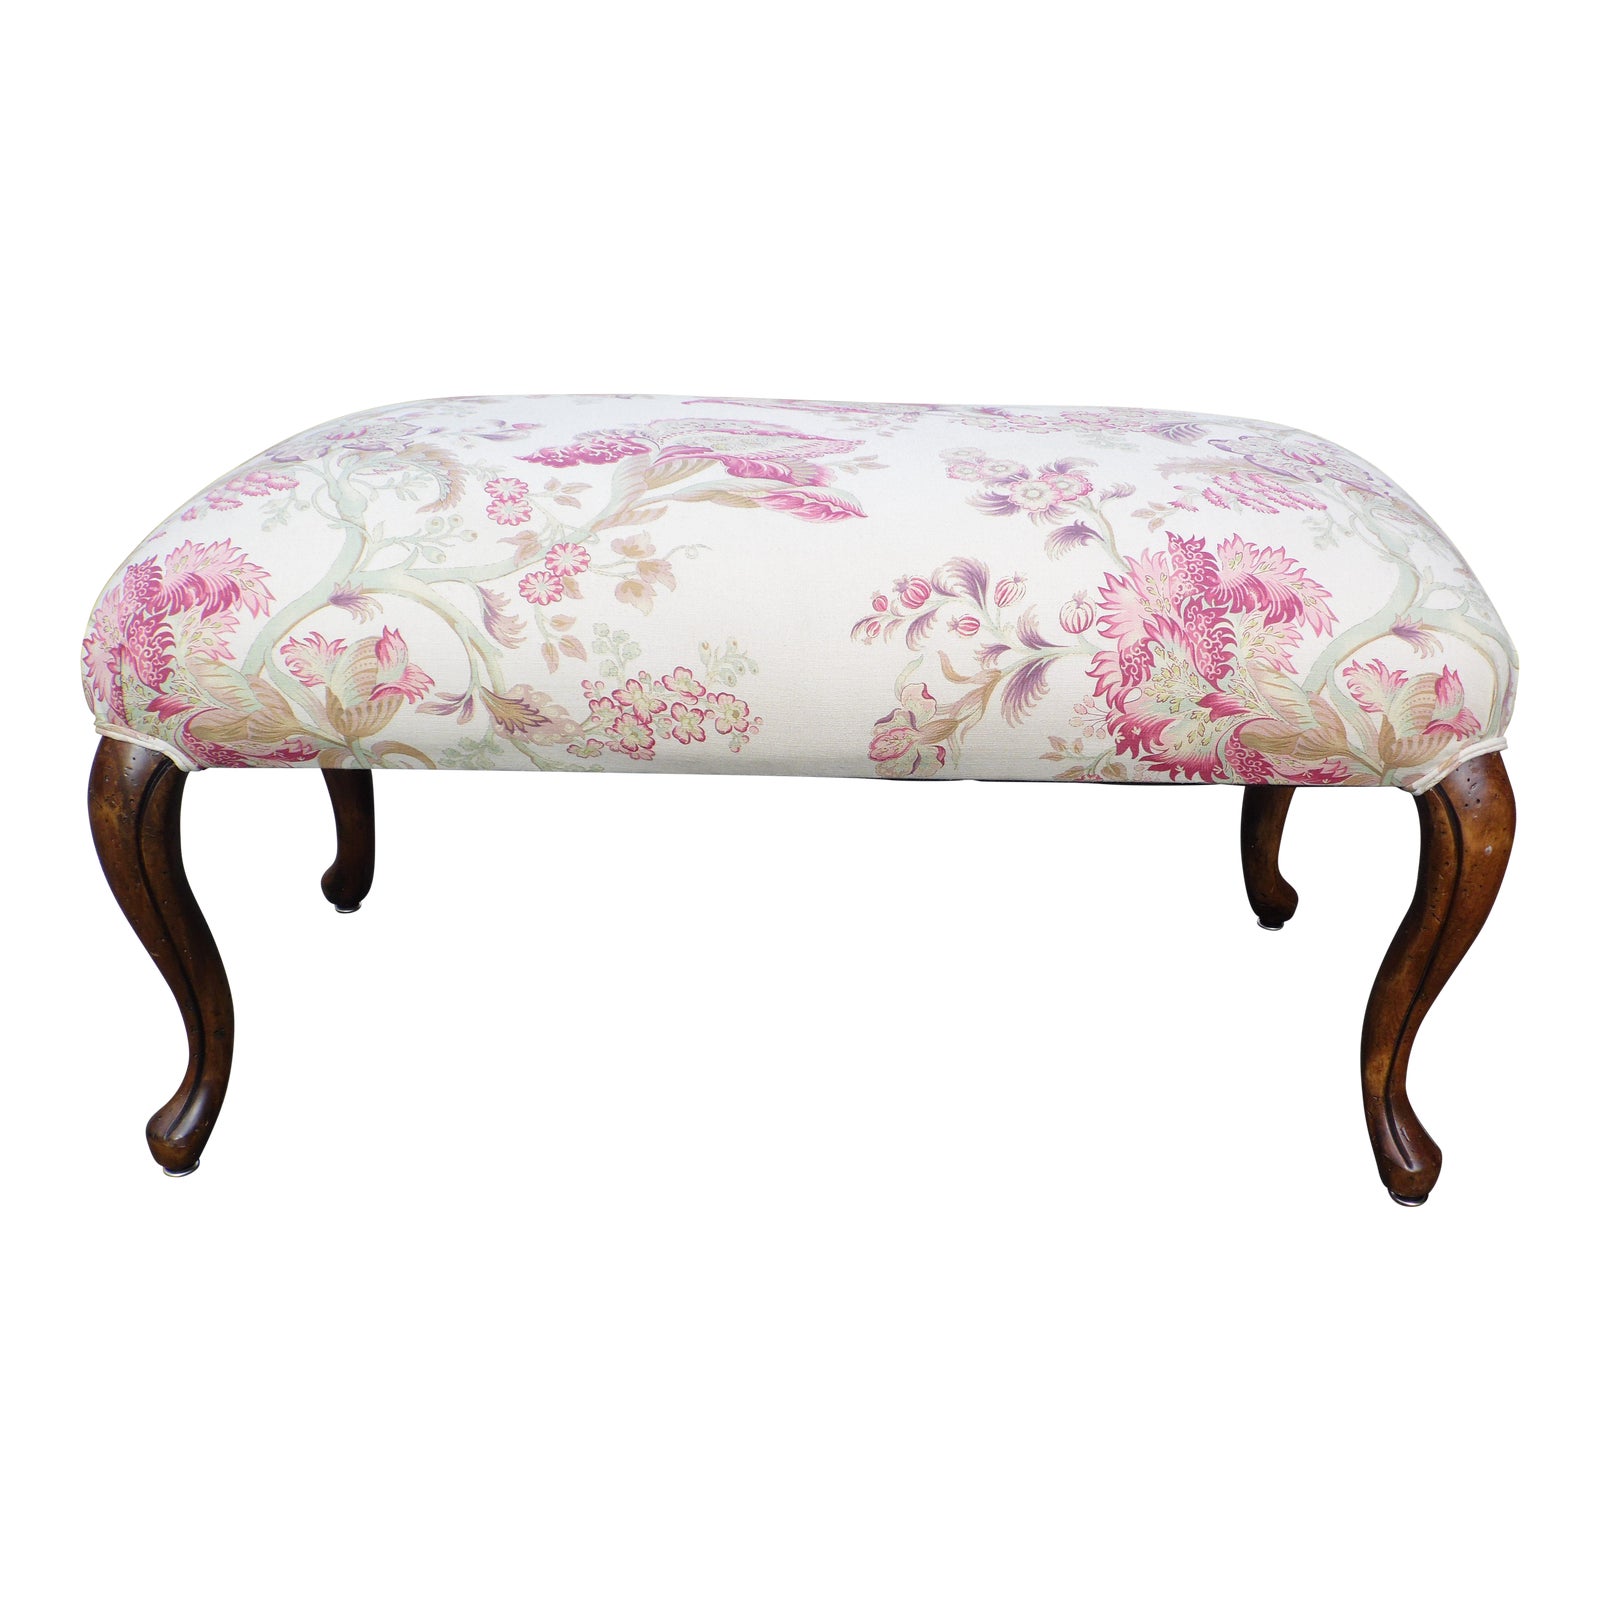 Vintage Upholstered Queen Anne Vanity, Vanity Seats Benches